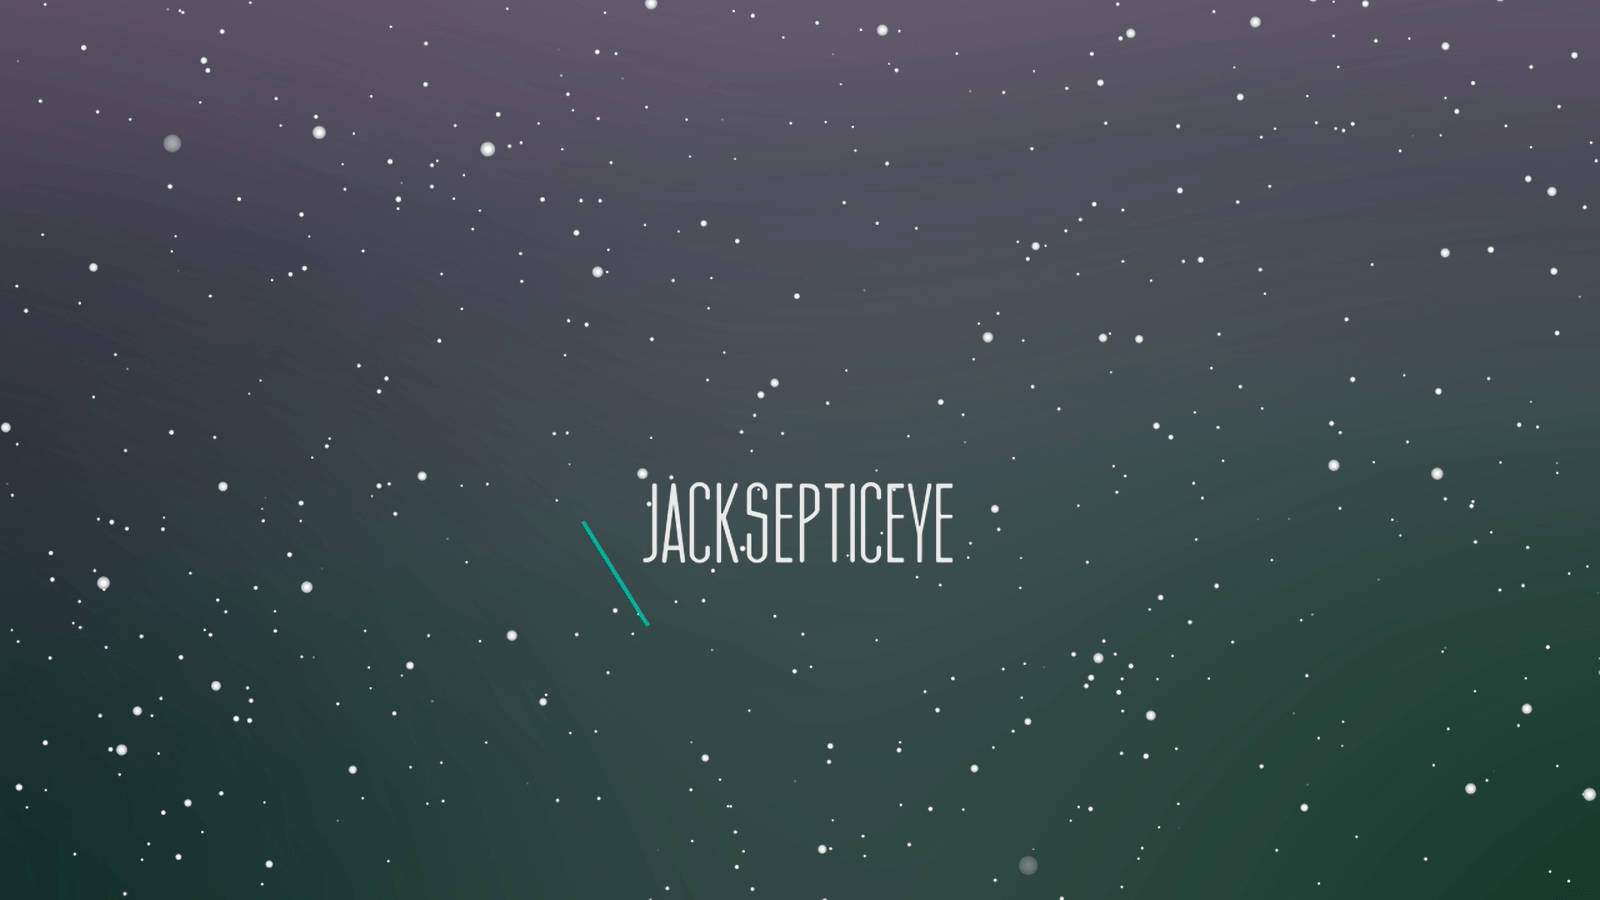 Jacksepticeye Night Sky Wallpaper